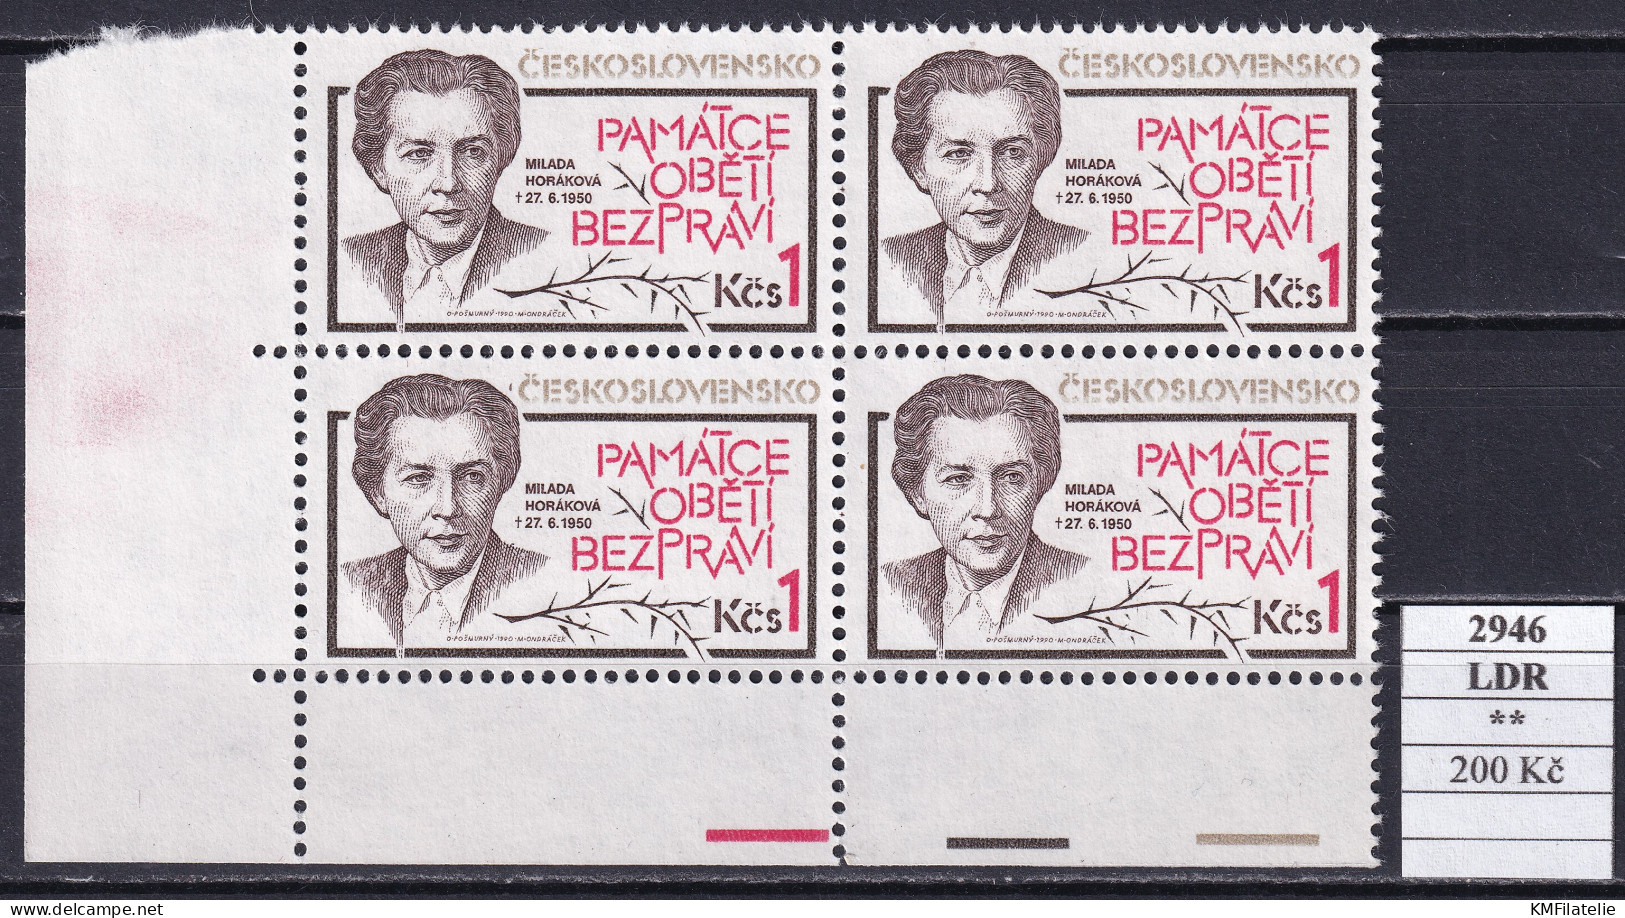 Czechoslovakia Pofis 2946 LDR MNH - Unused Stamps